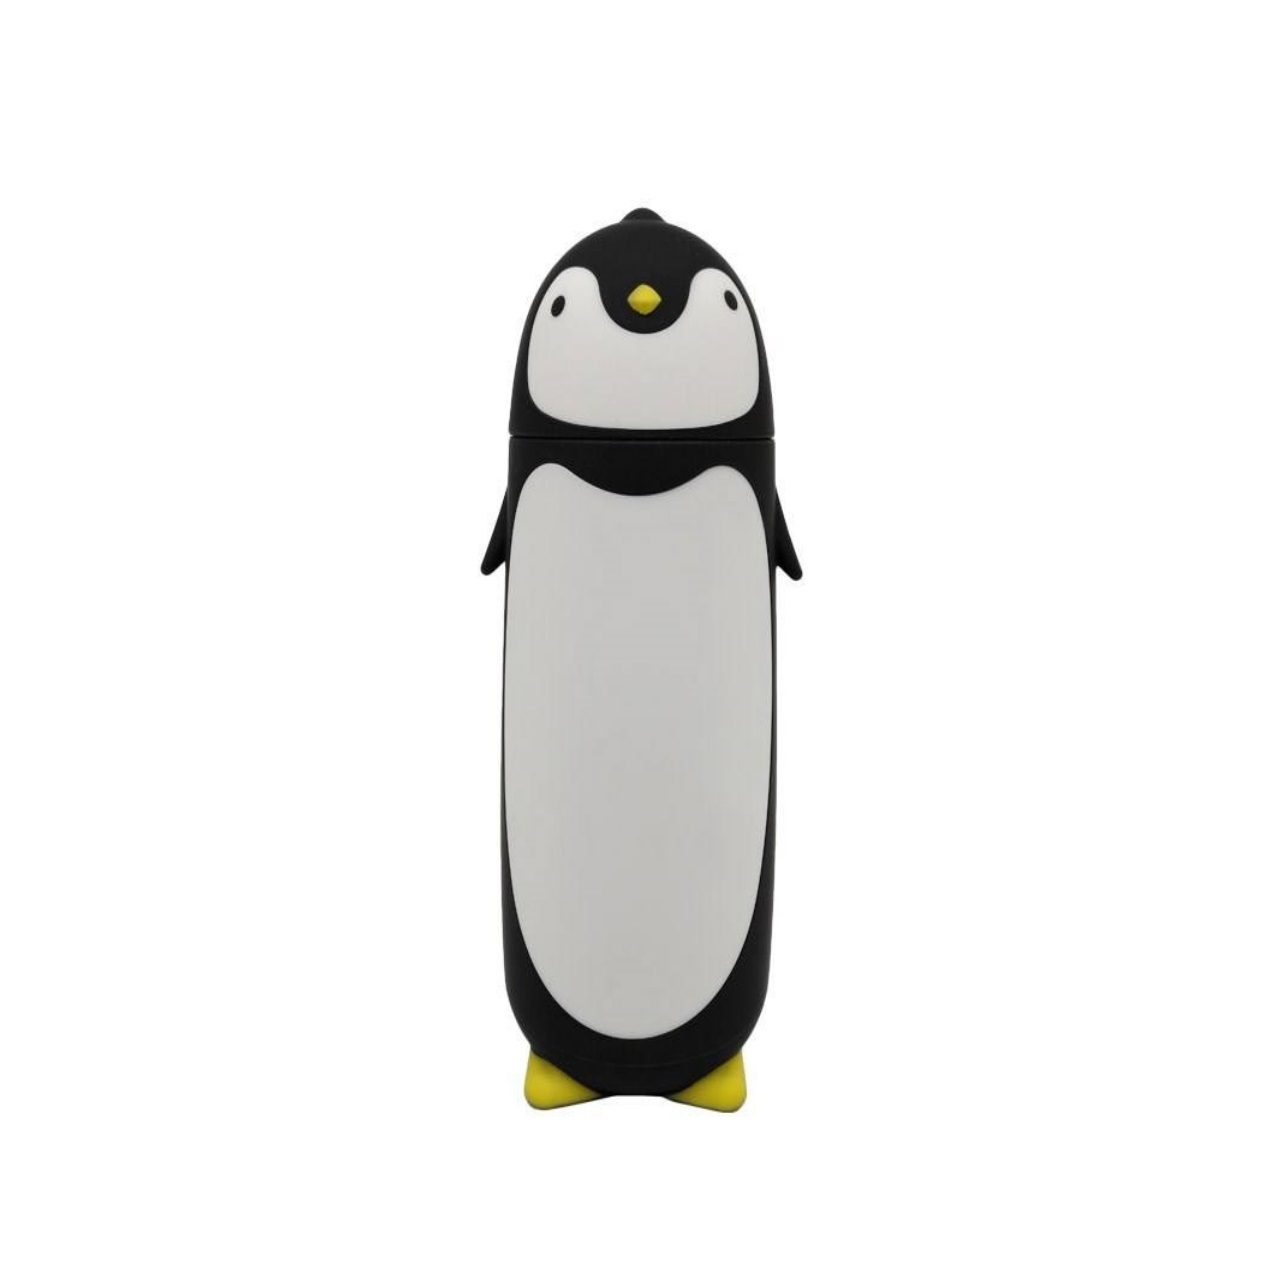 فلاسک کودک لنگوئین طرح پنگوئن حجم 300 میلی لیتر